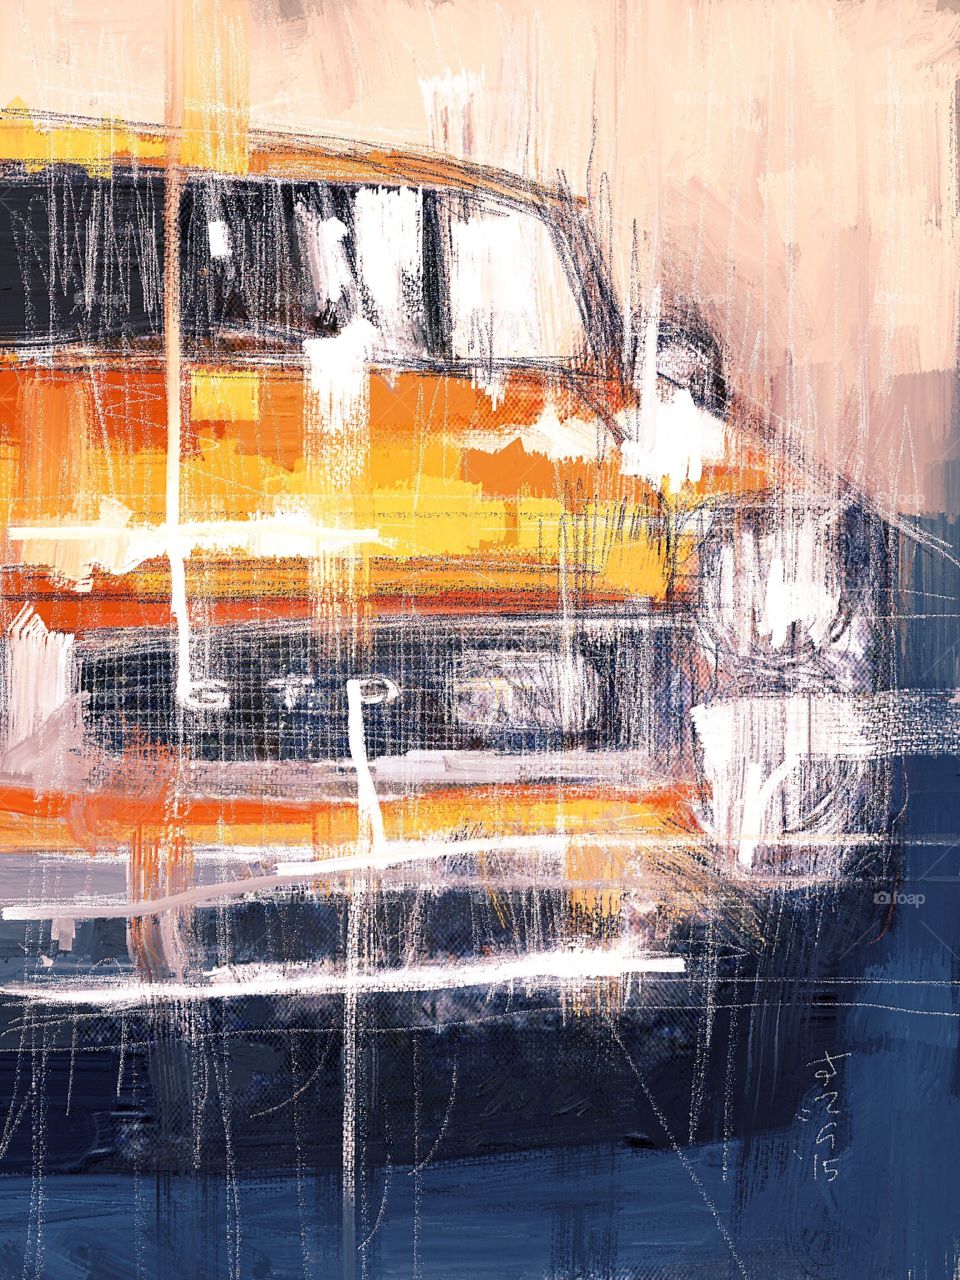 Orange Classic car. A painting of an orange classic car...;)